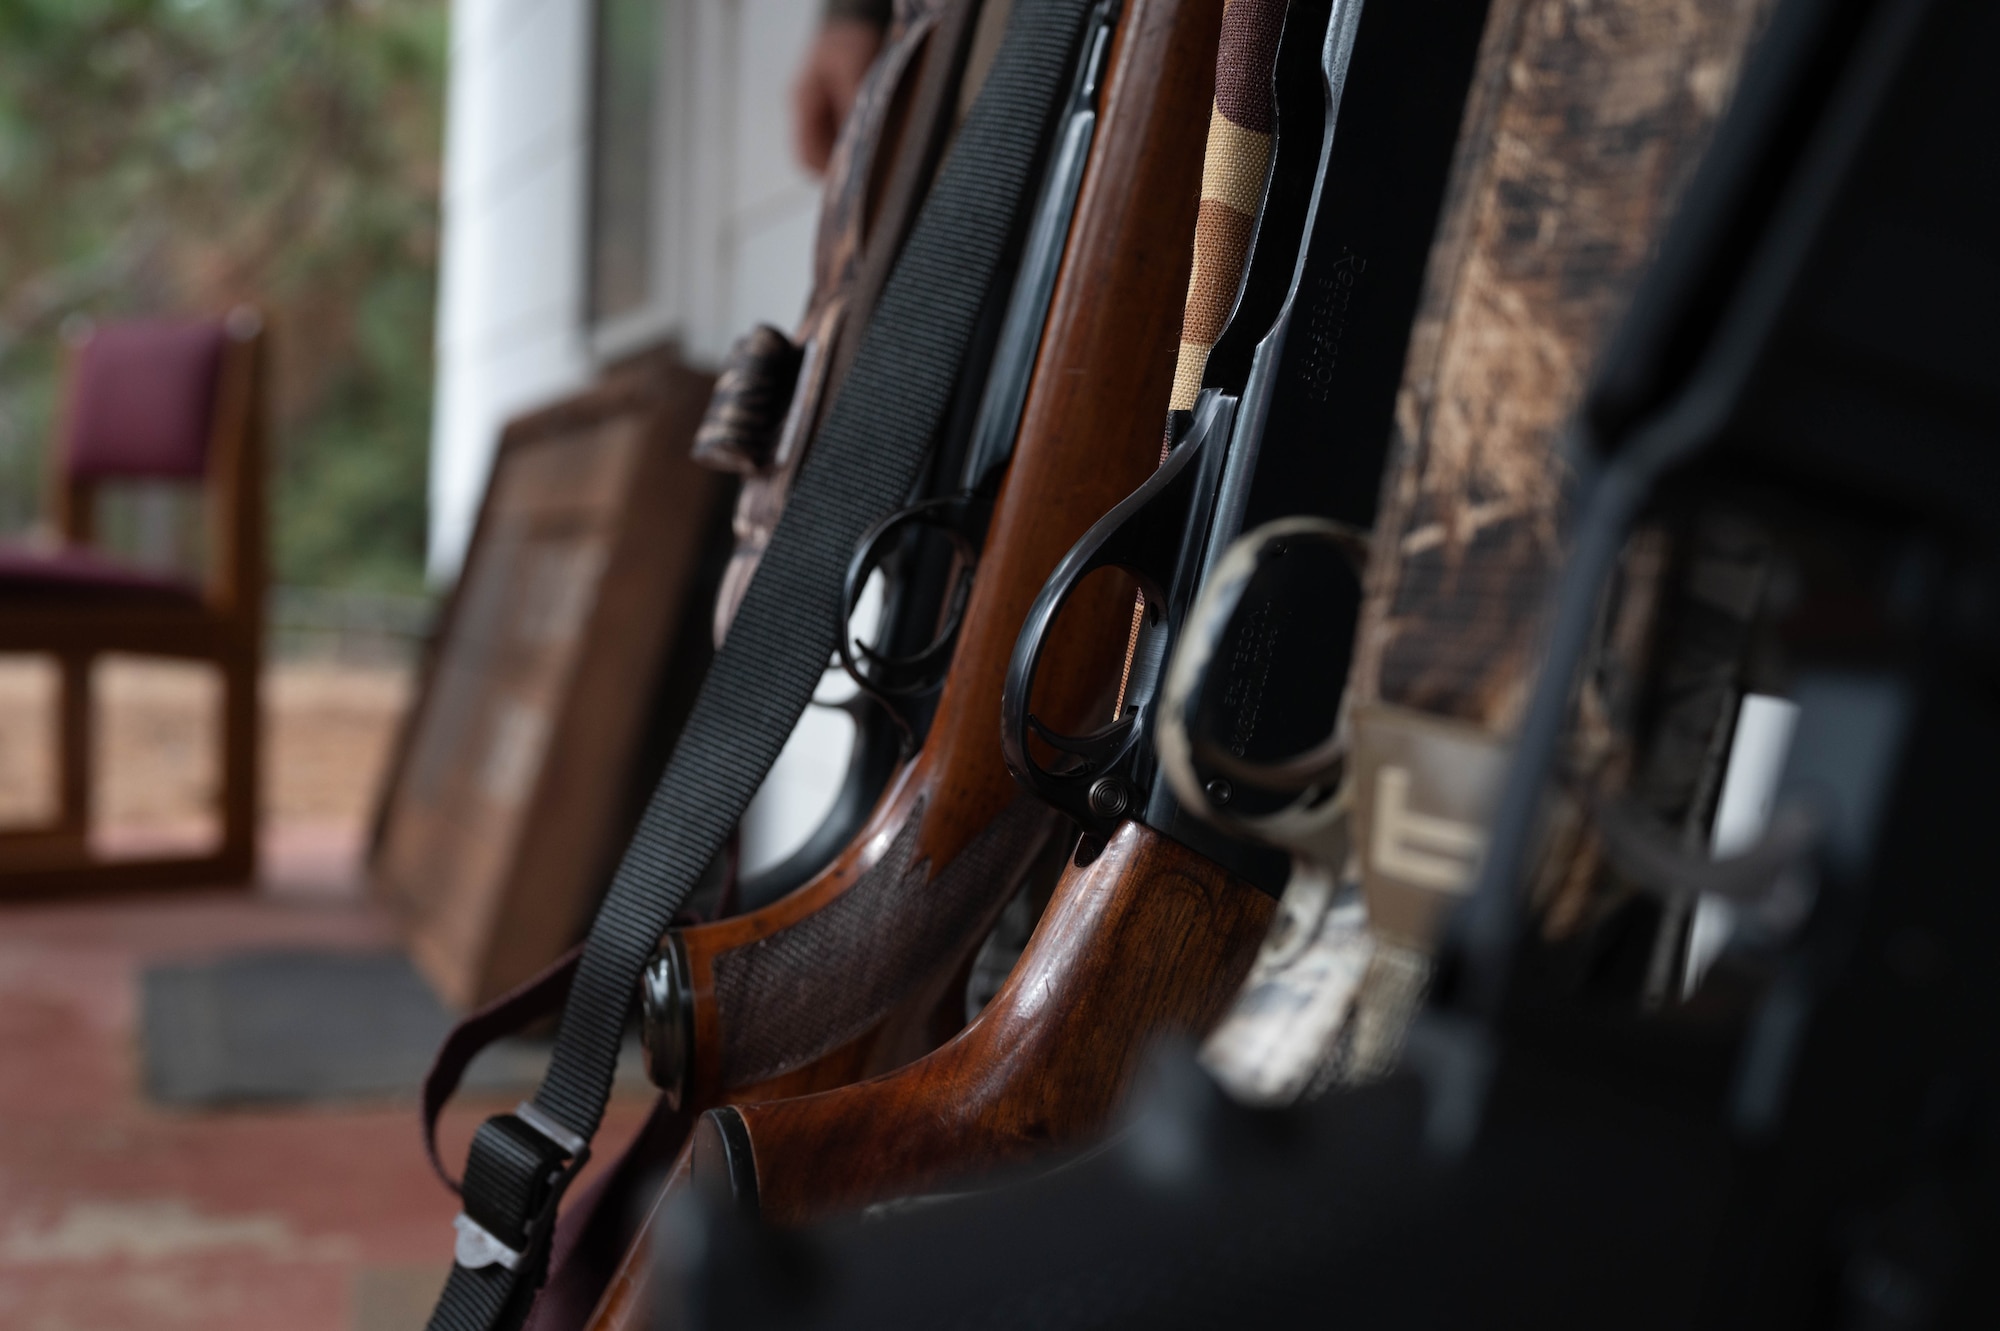 Hunting rifles rest on a gun rack awaiting retrieval.